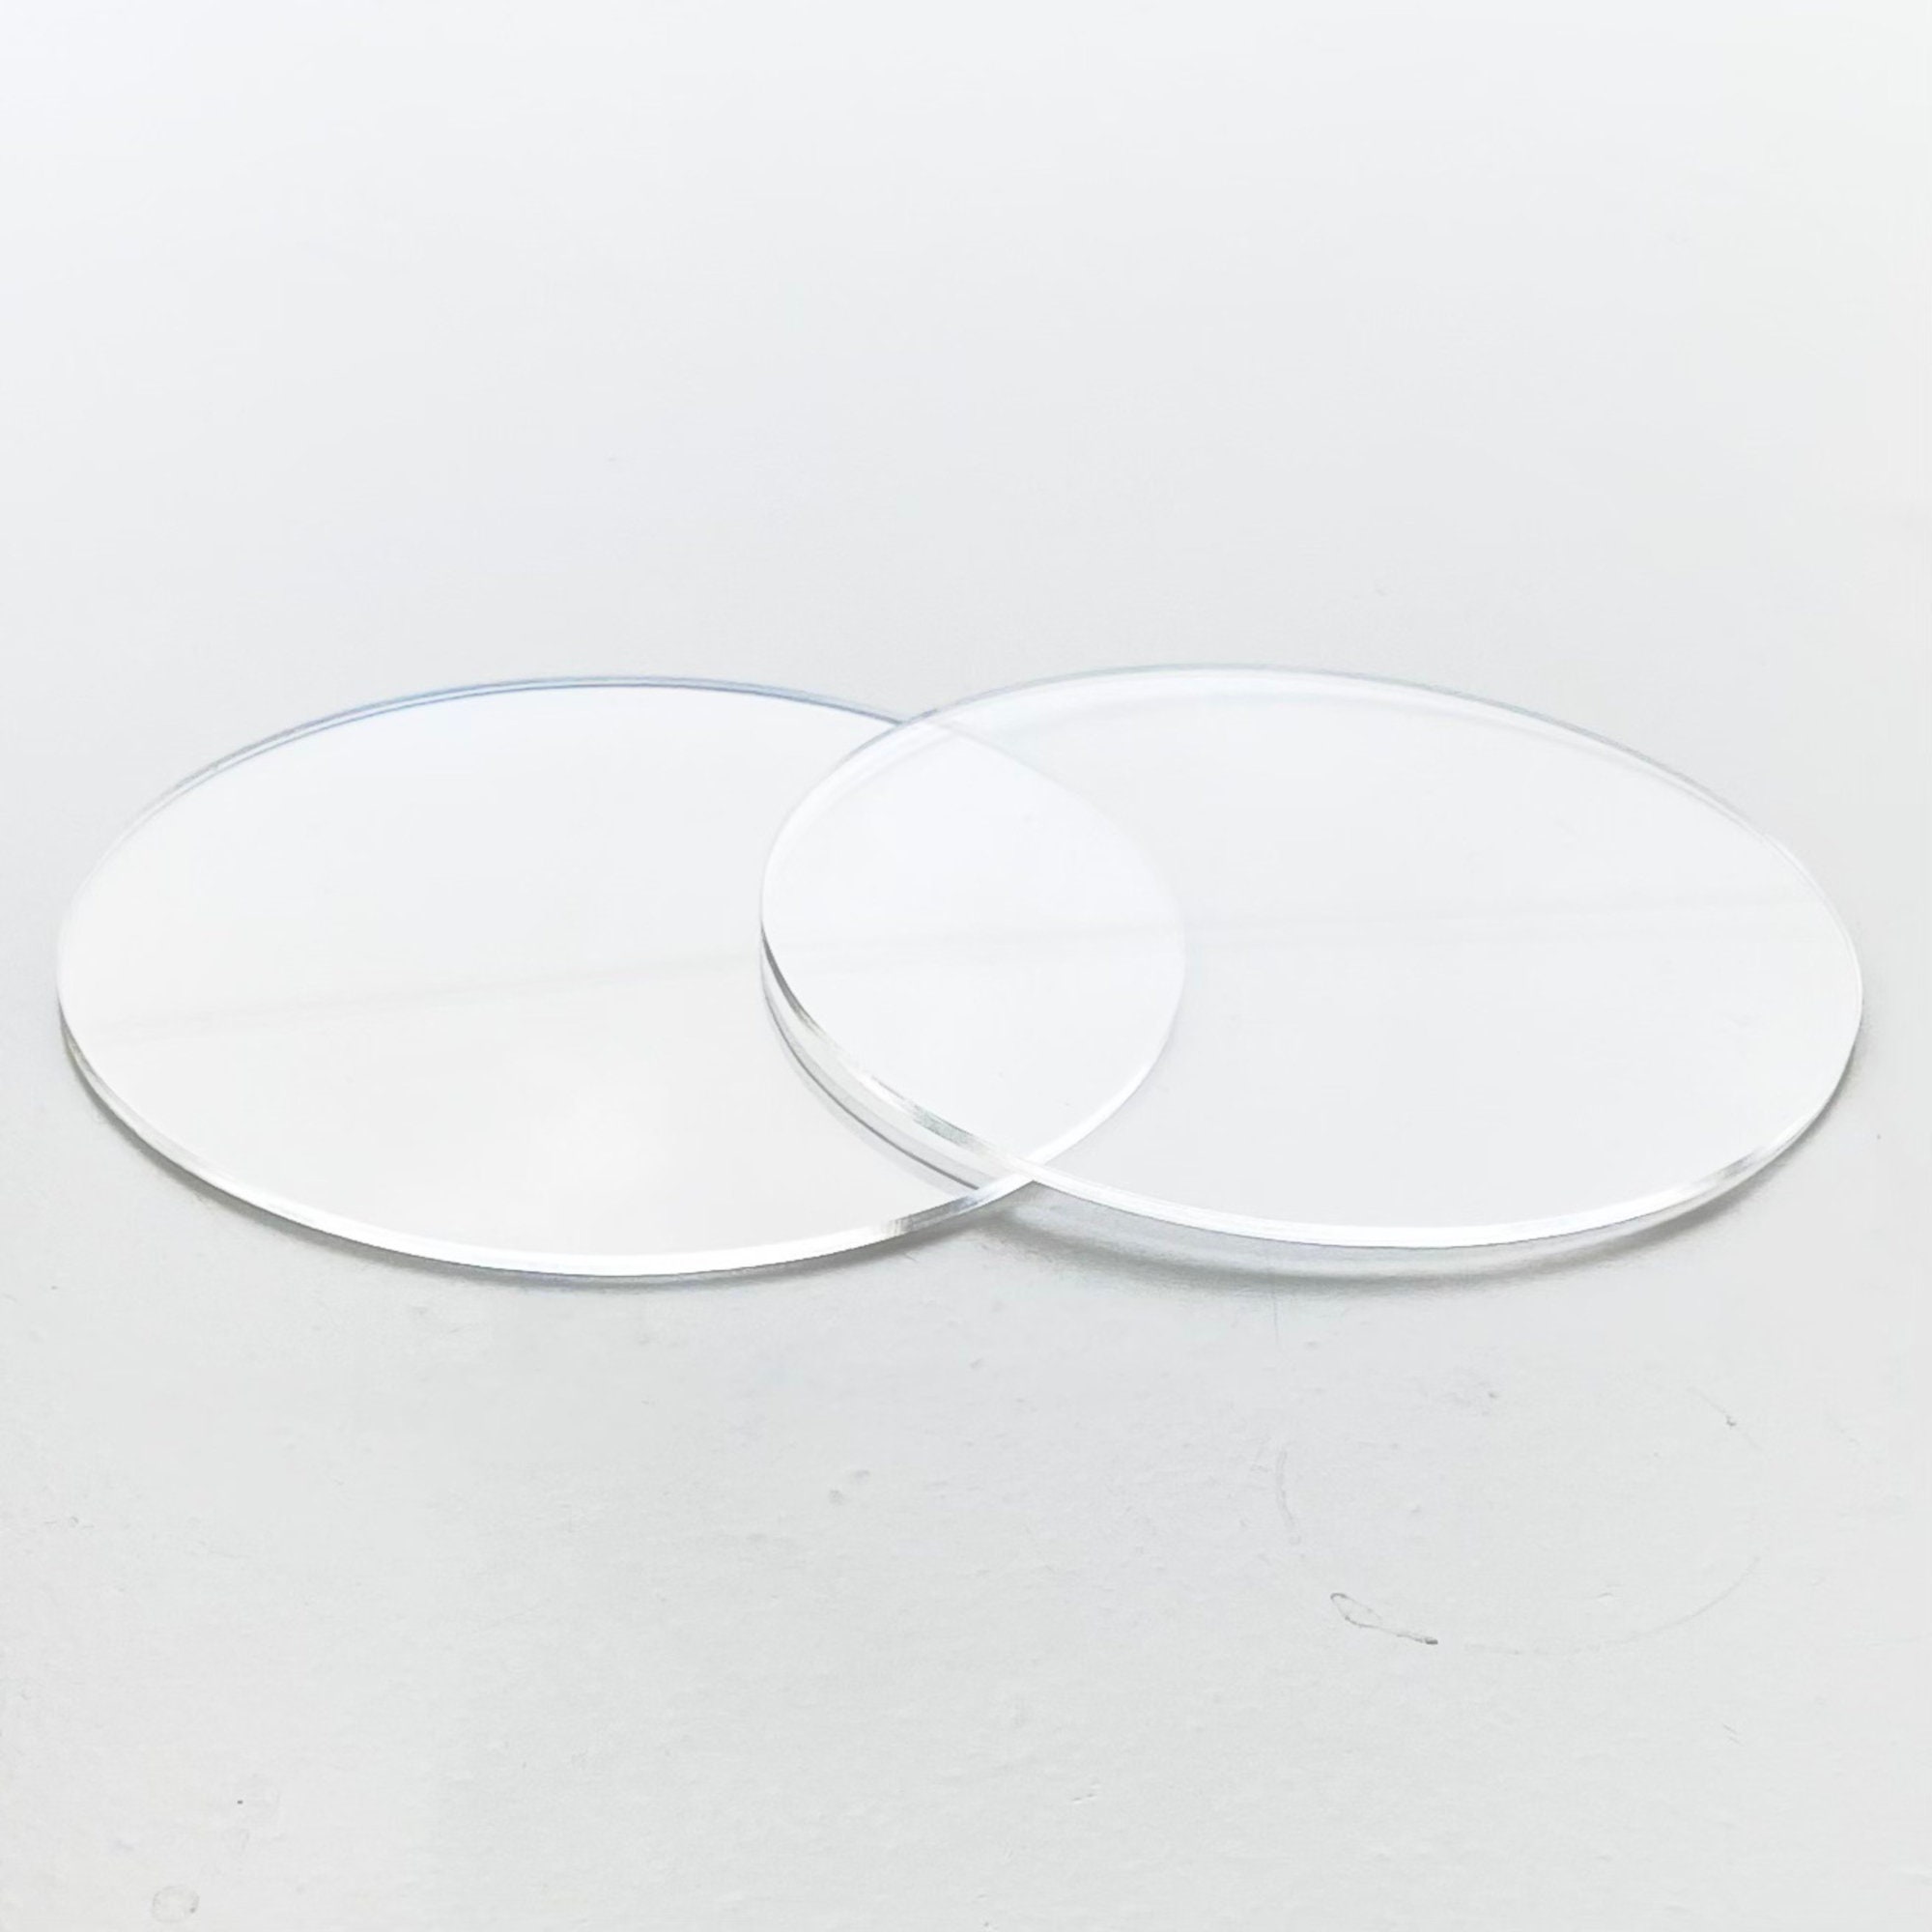 Fluorescent Acrylic Discs Circles, 3mm Lasercut sizes 20mm to 600mm diameter